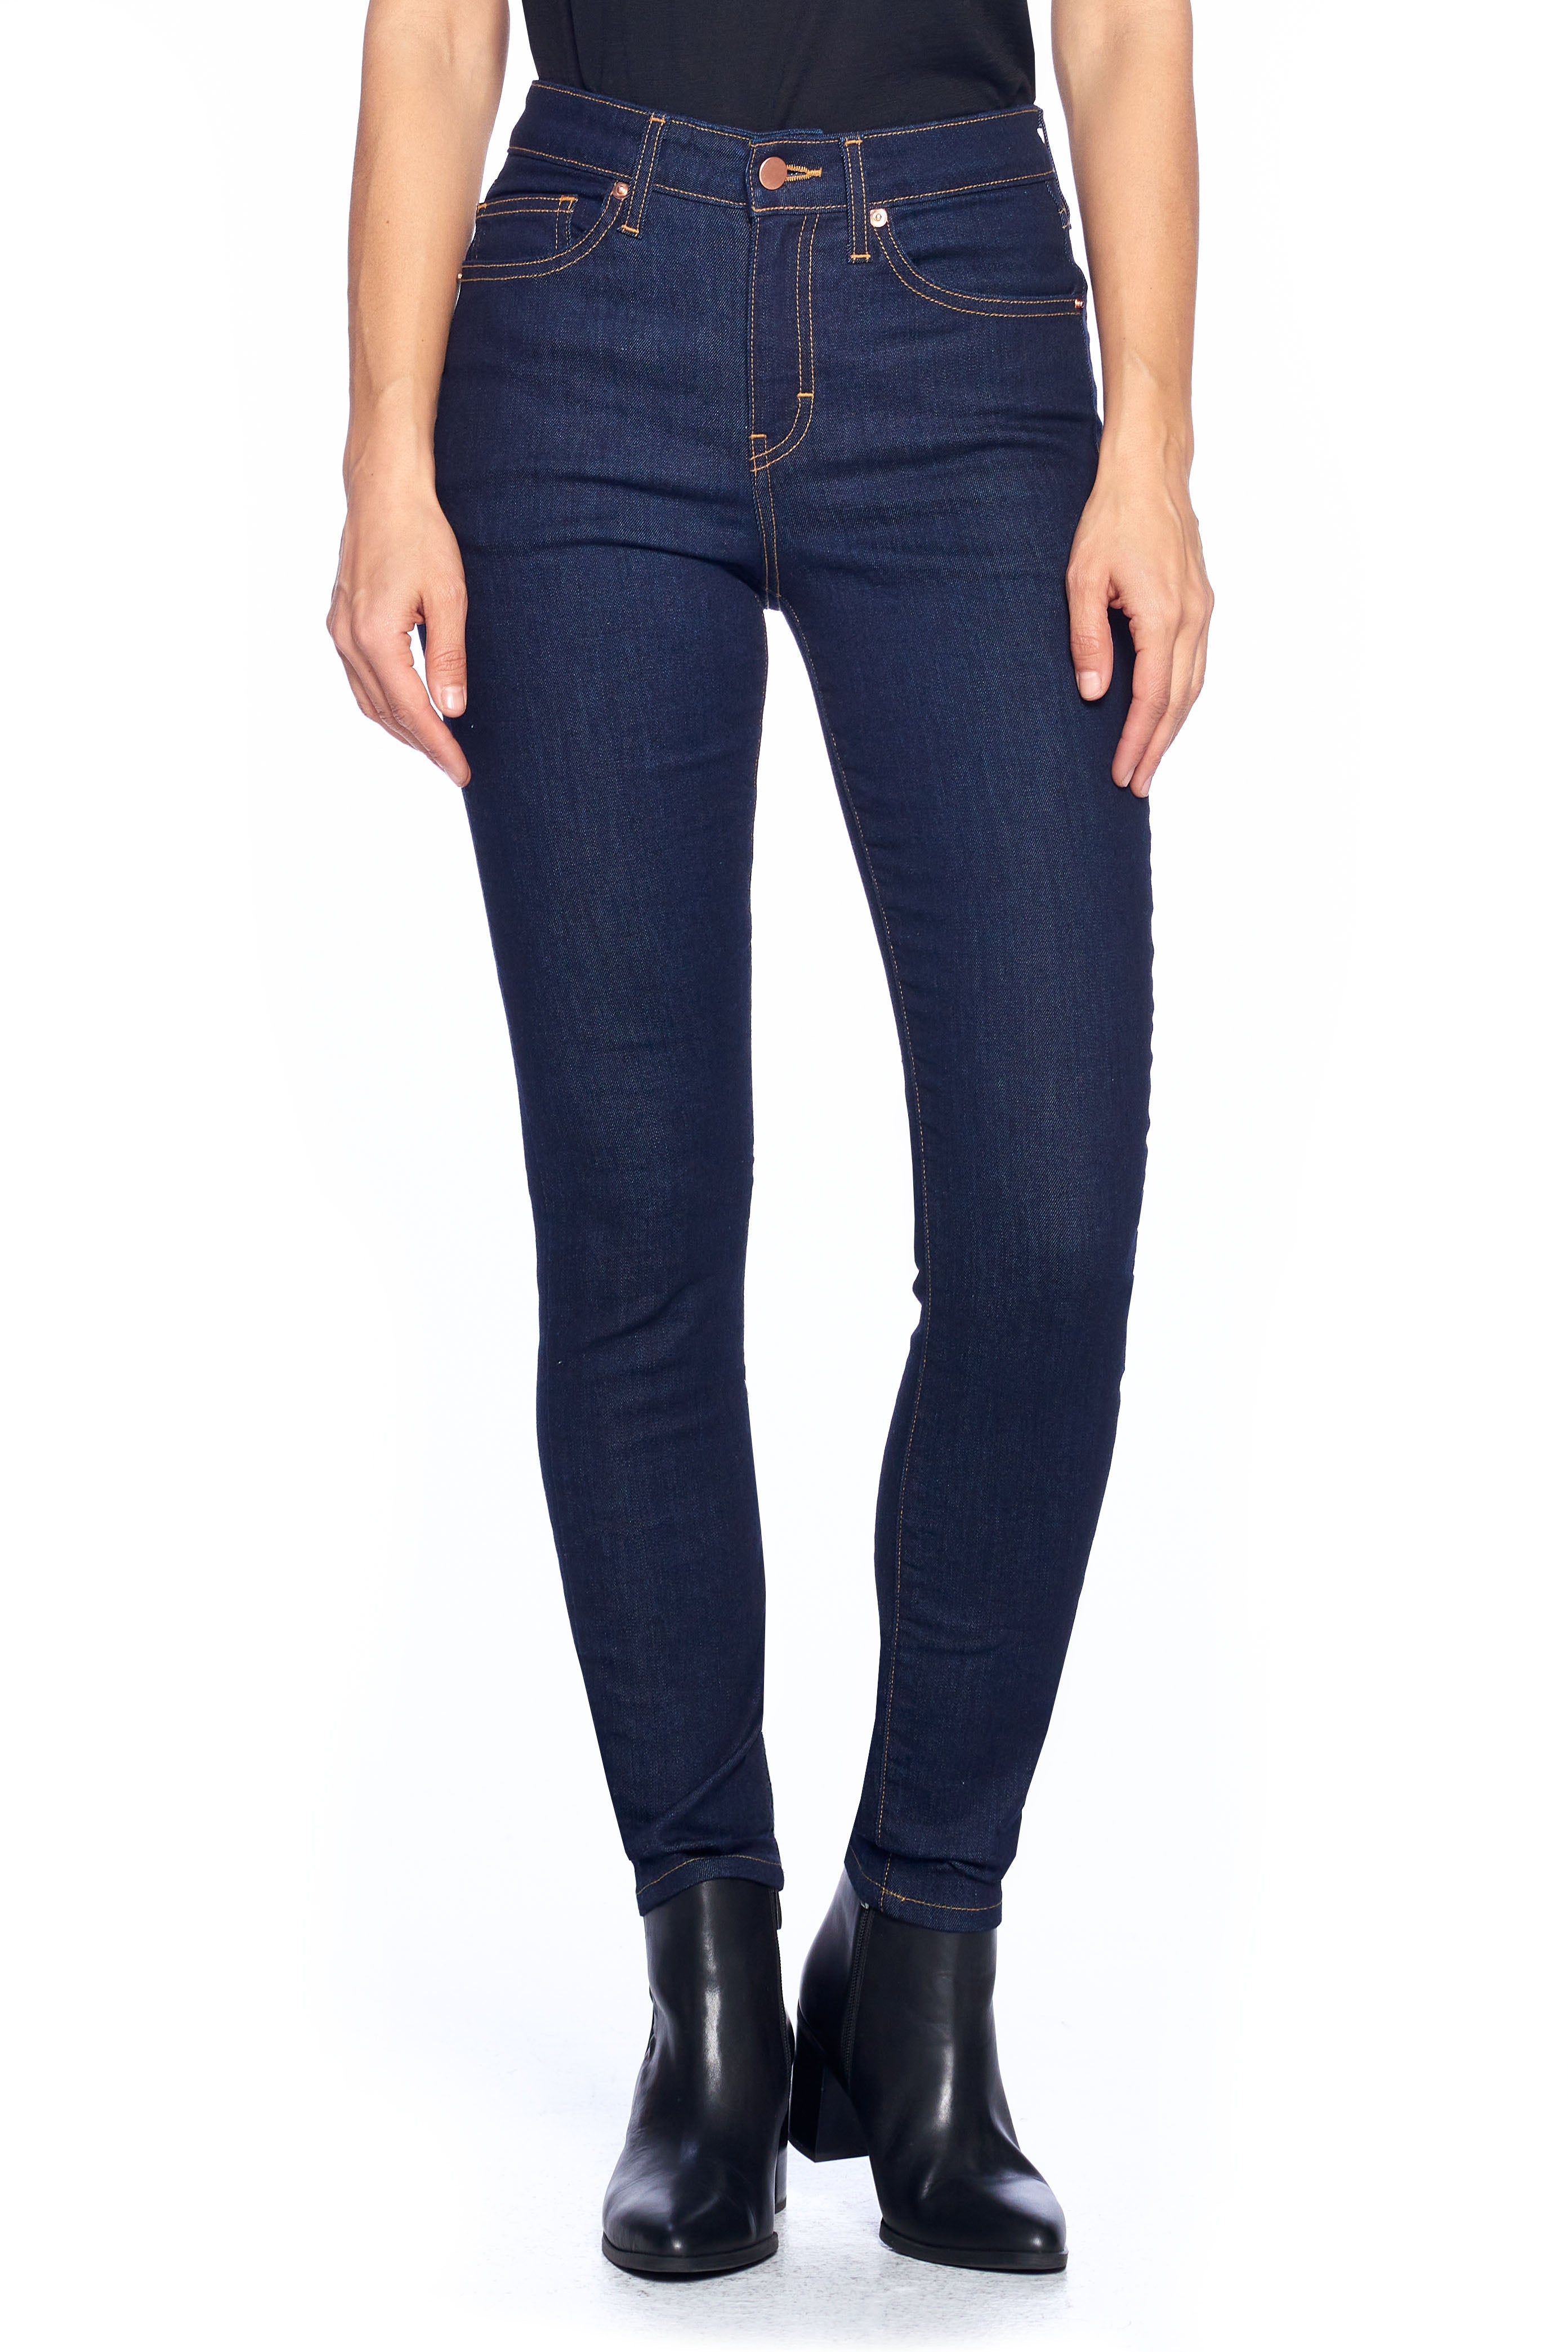 Women's Comfort Skinny Fit Jeans | Dark | Made in the USA - Aviator